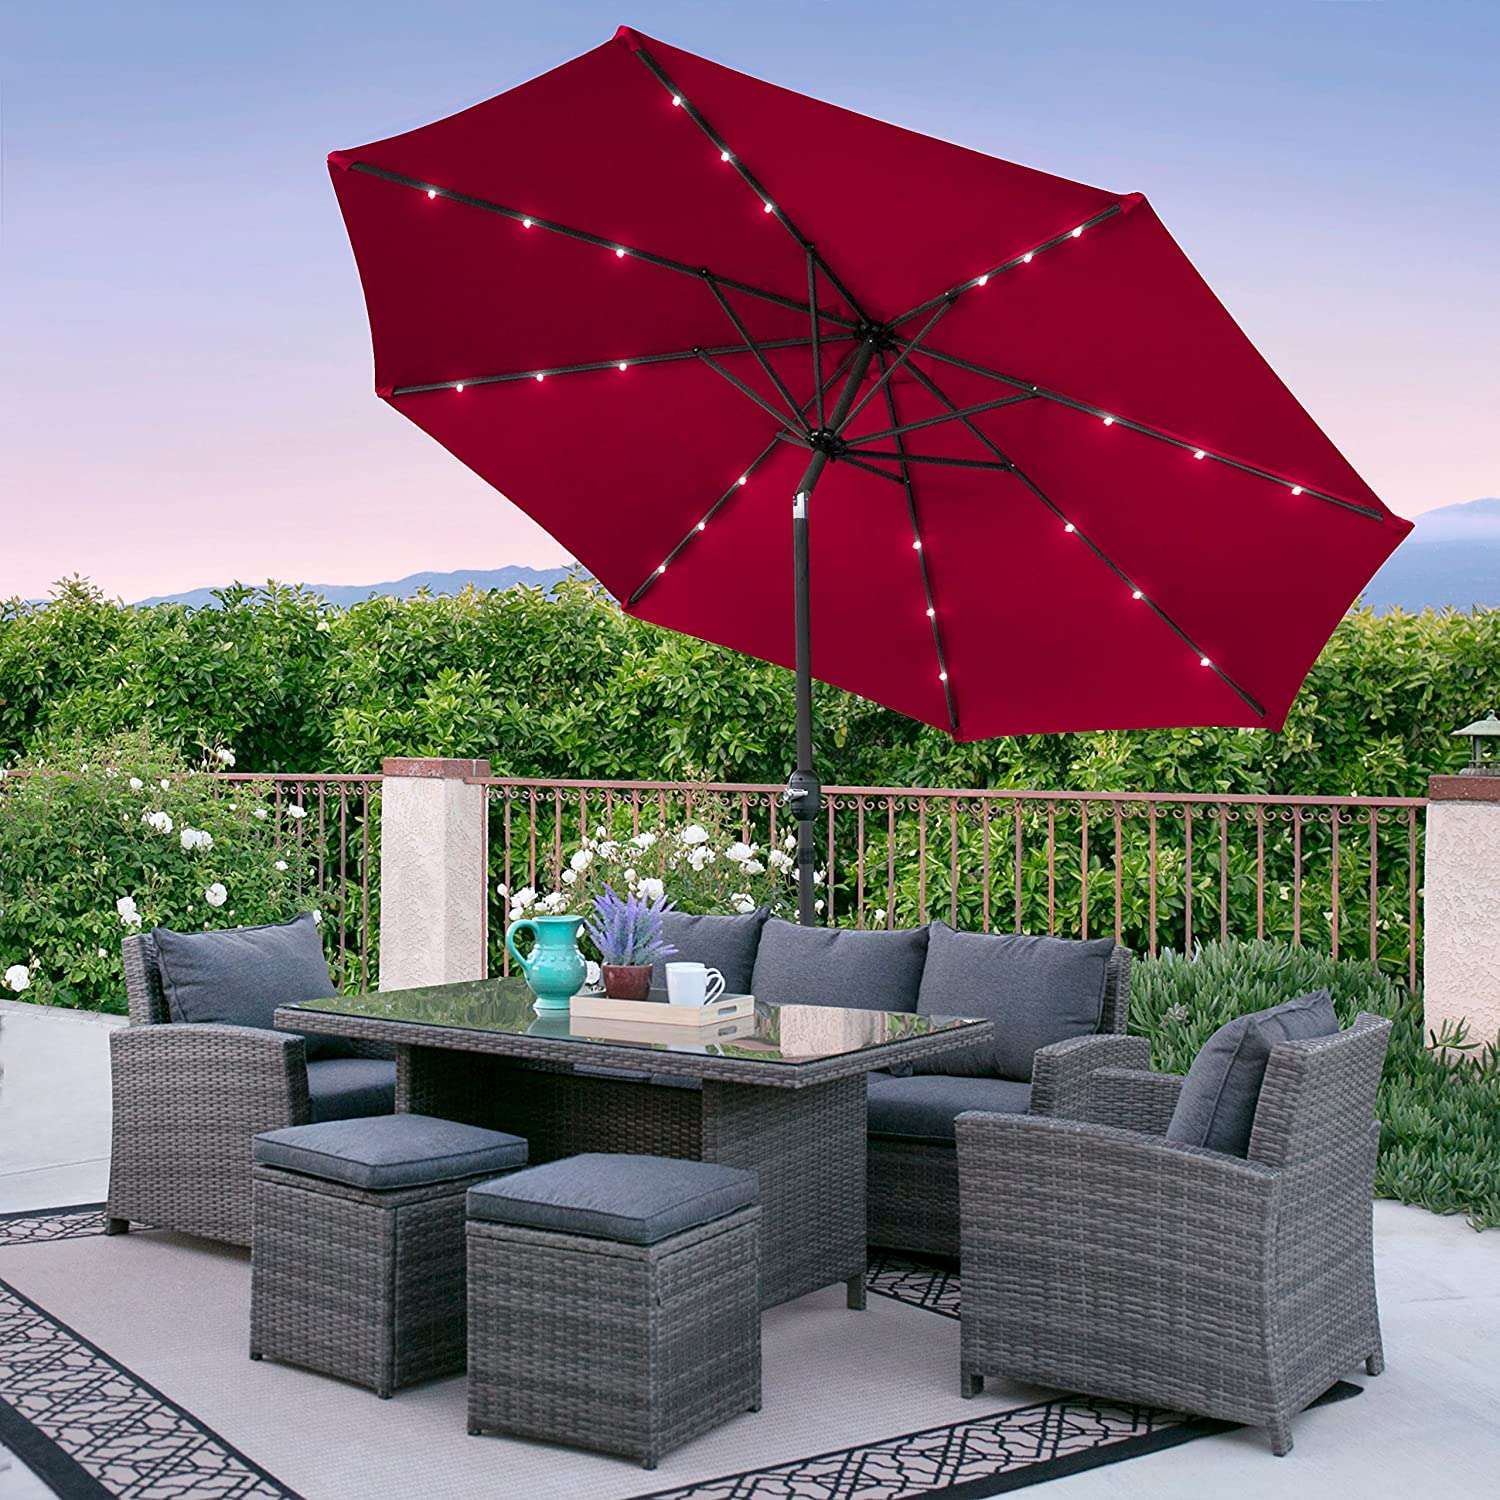 The Best Patio Umbrellas For Your Garden Or Backyard ...